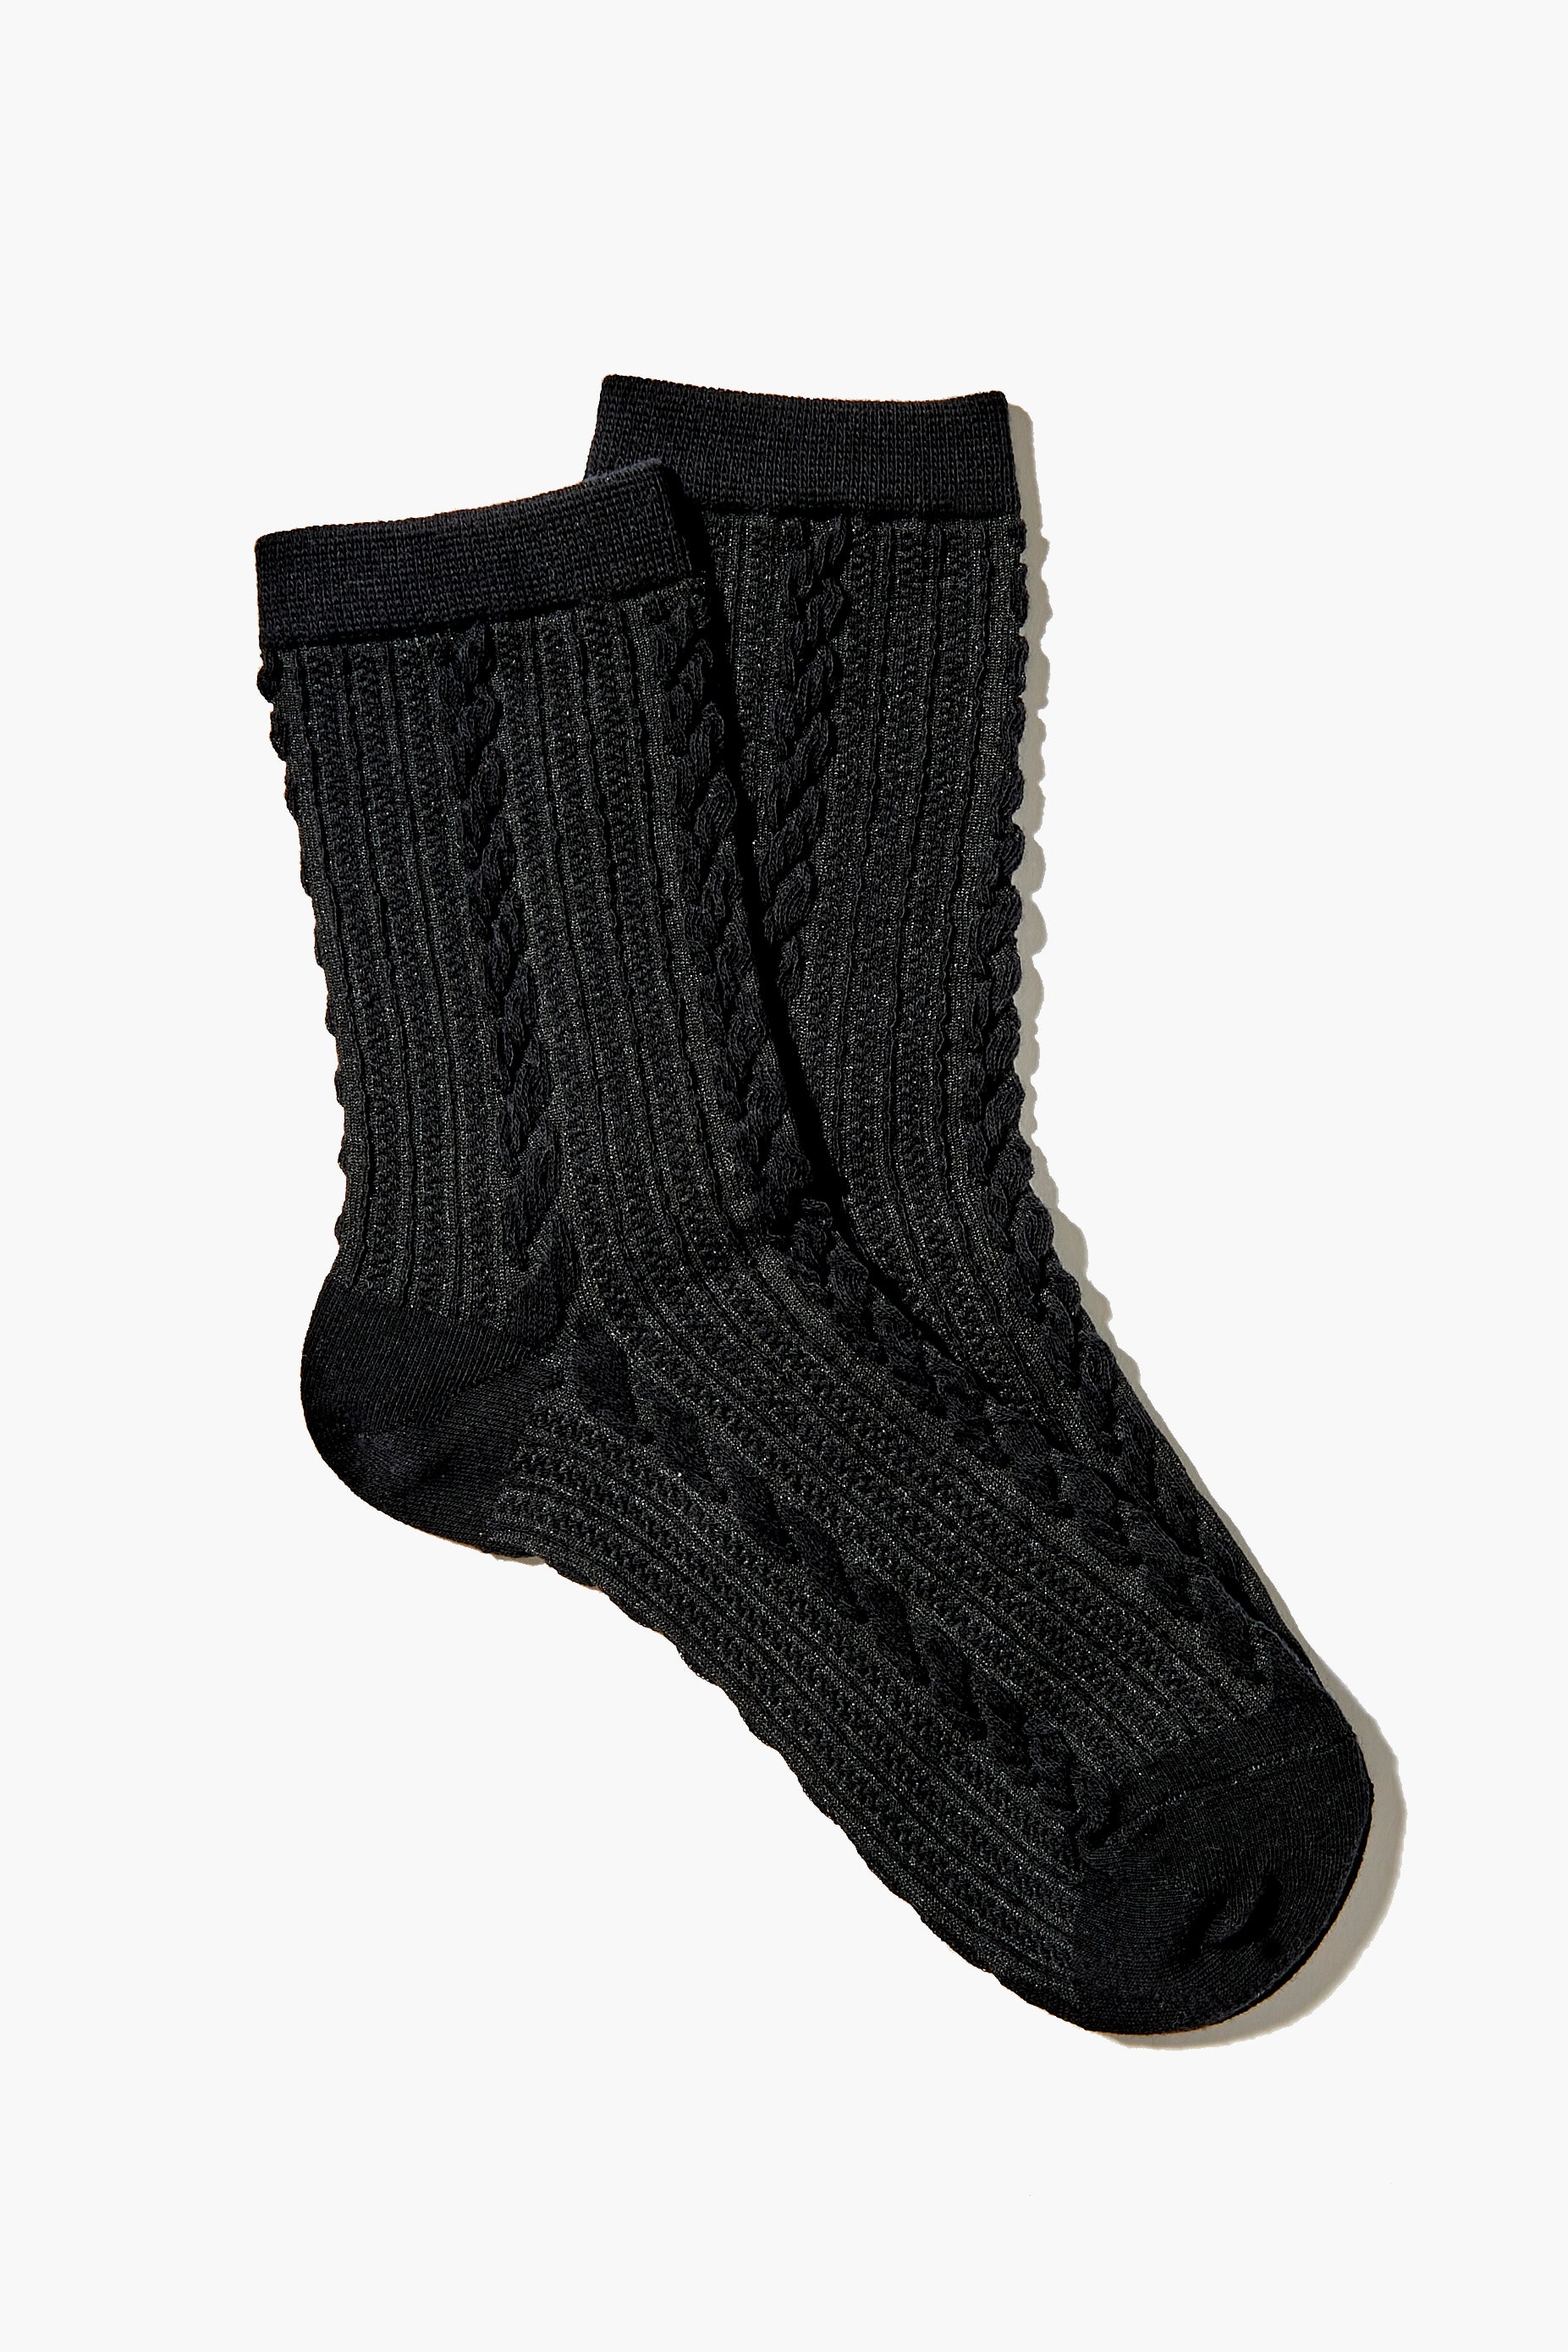 Black Cable Knit Crew Socks 1